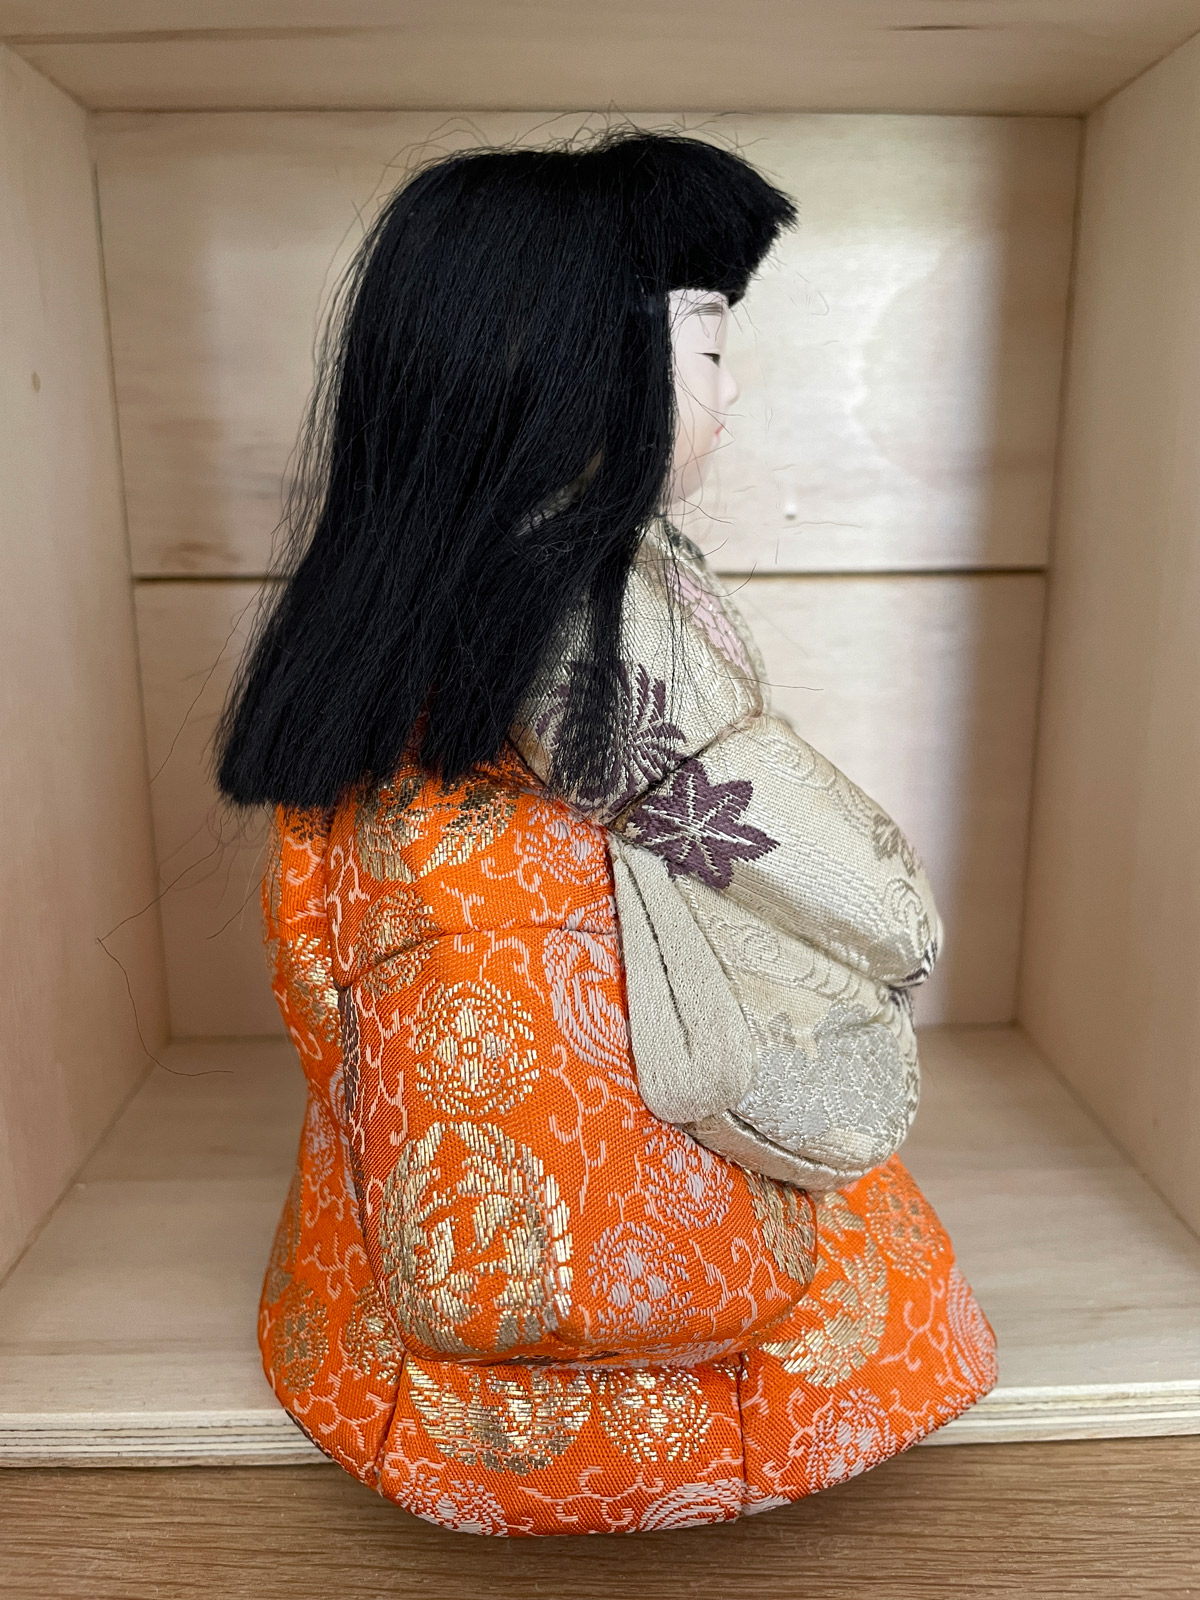 Vintage Kimekomi doll wearing beautifully decorated Kimono